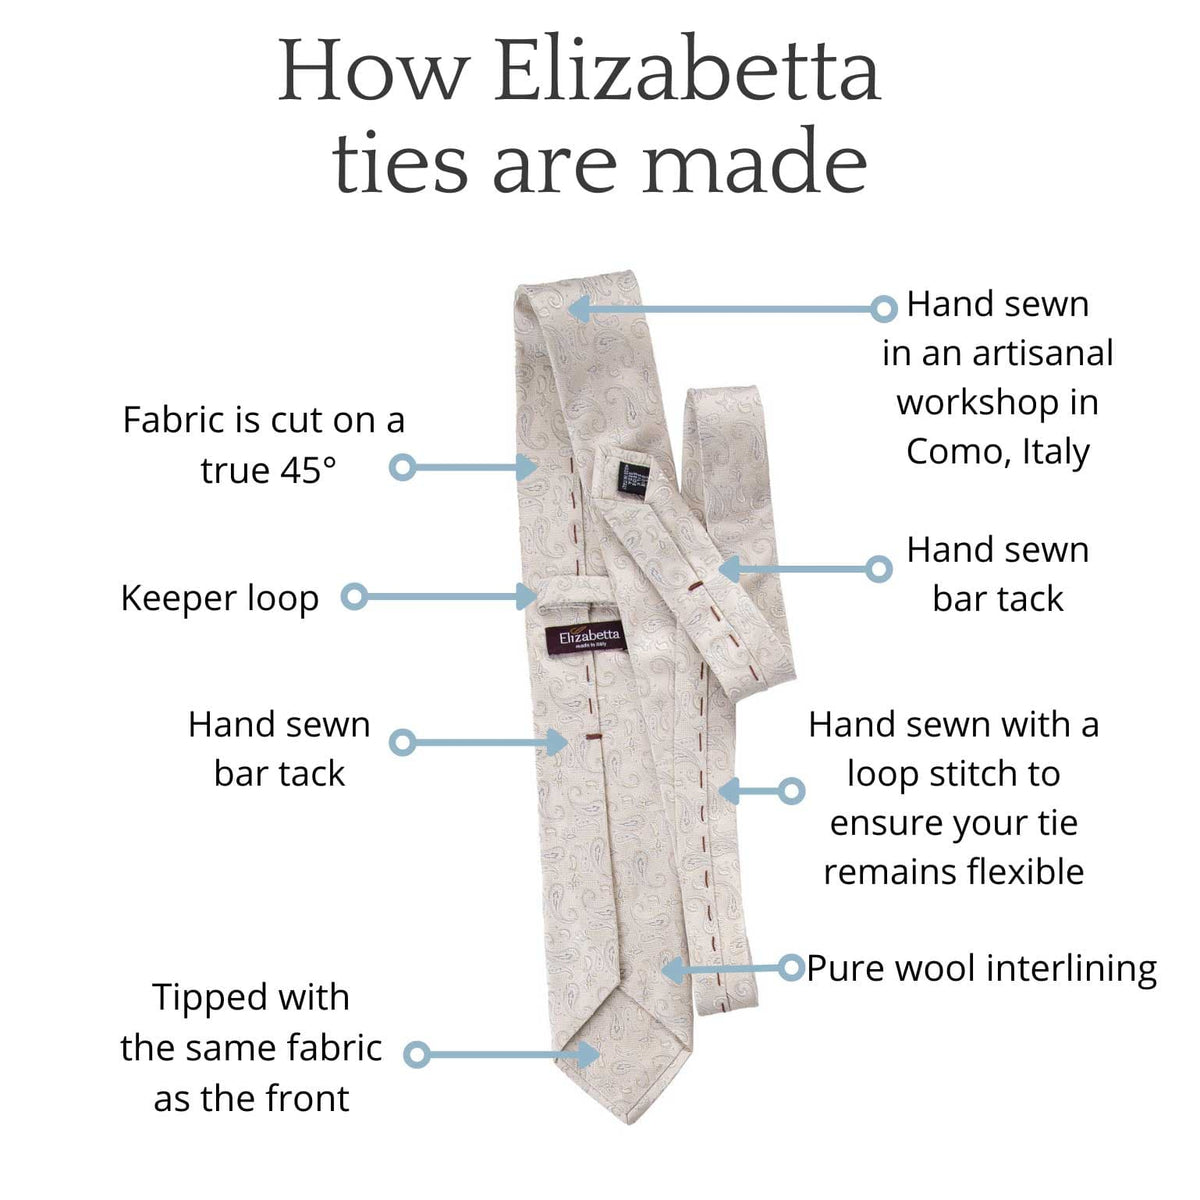 How an Elizabetta tie is made